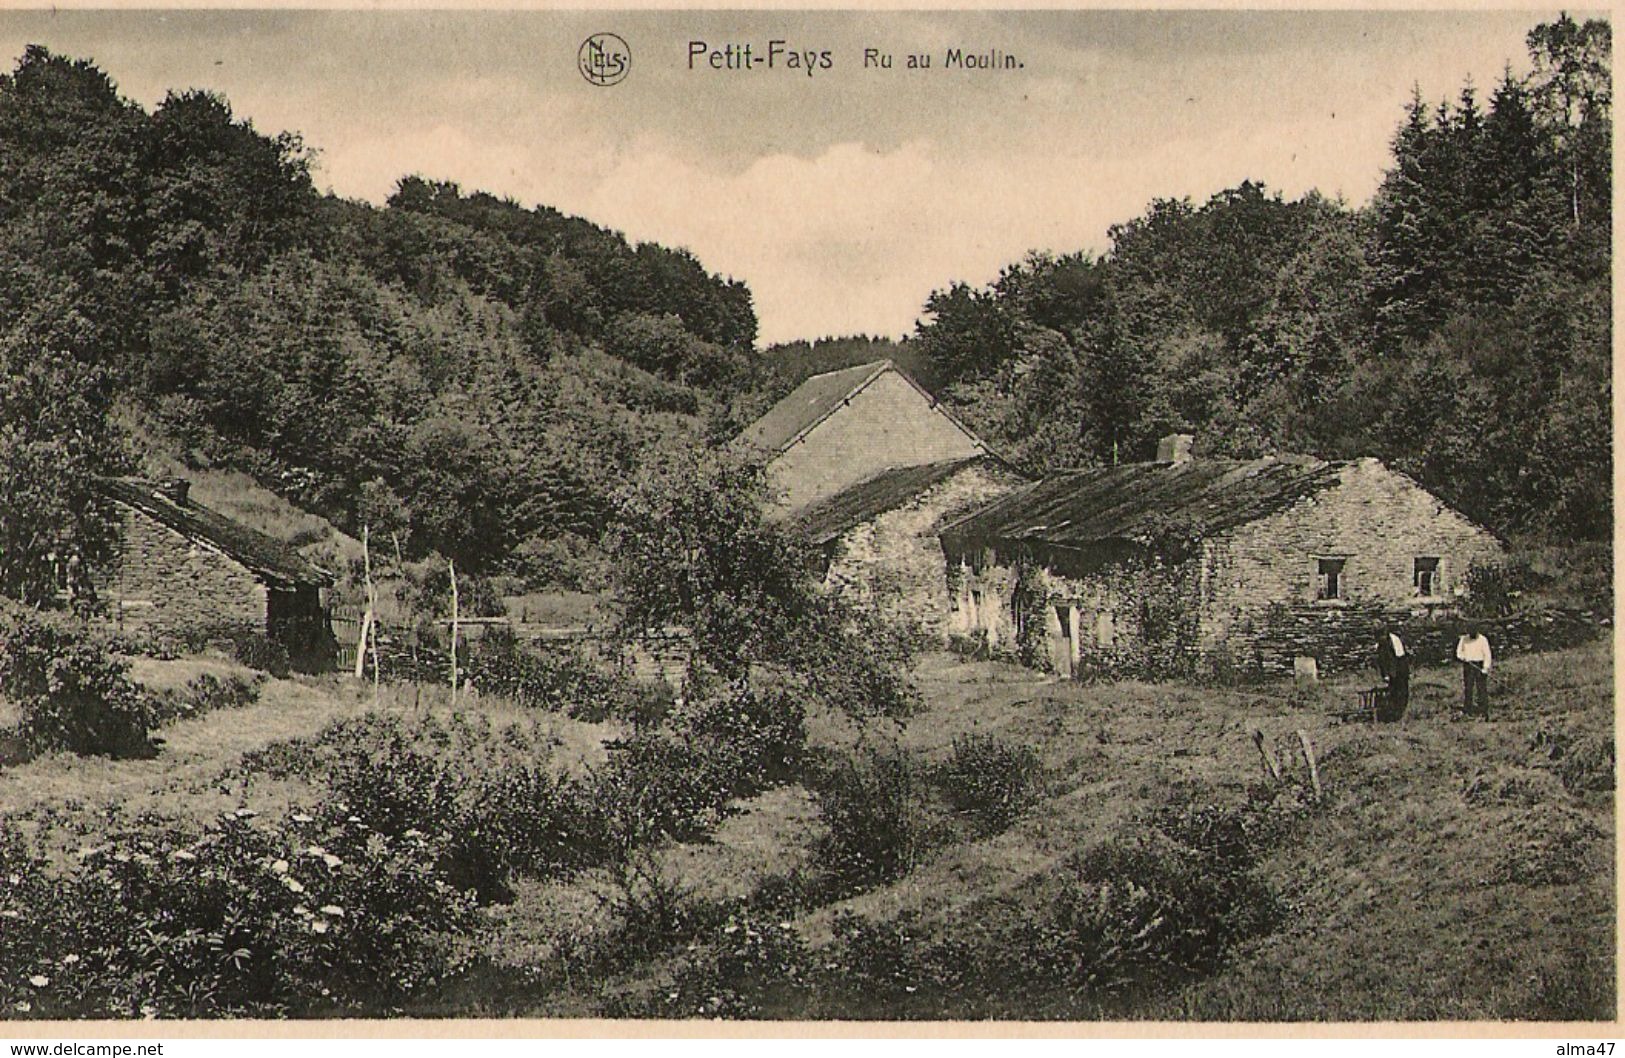 Petit-Fays - Monceau - Ru Au Moulin Animé - Circulé 1954 - Edit. Hôtel De La Vallée J. Robinet Grandjean - Bièvre